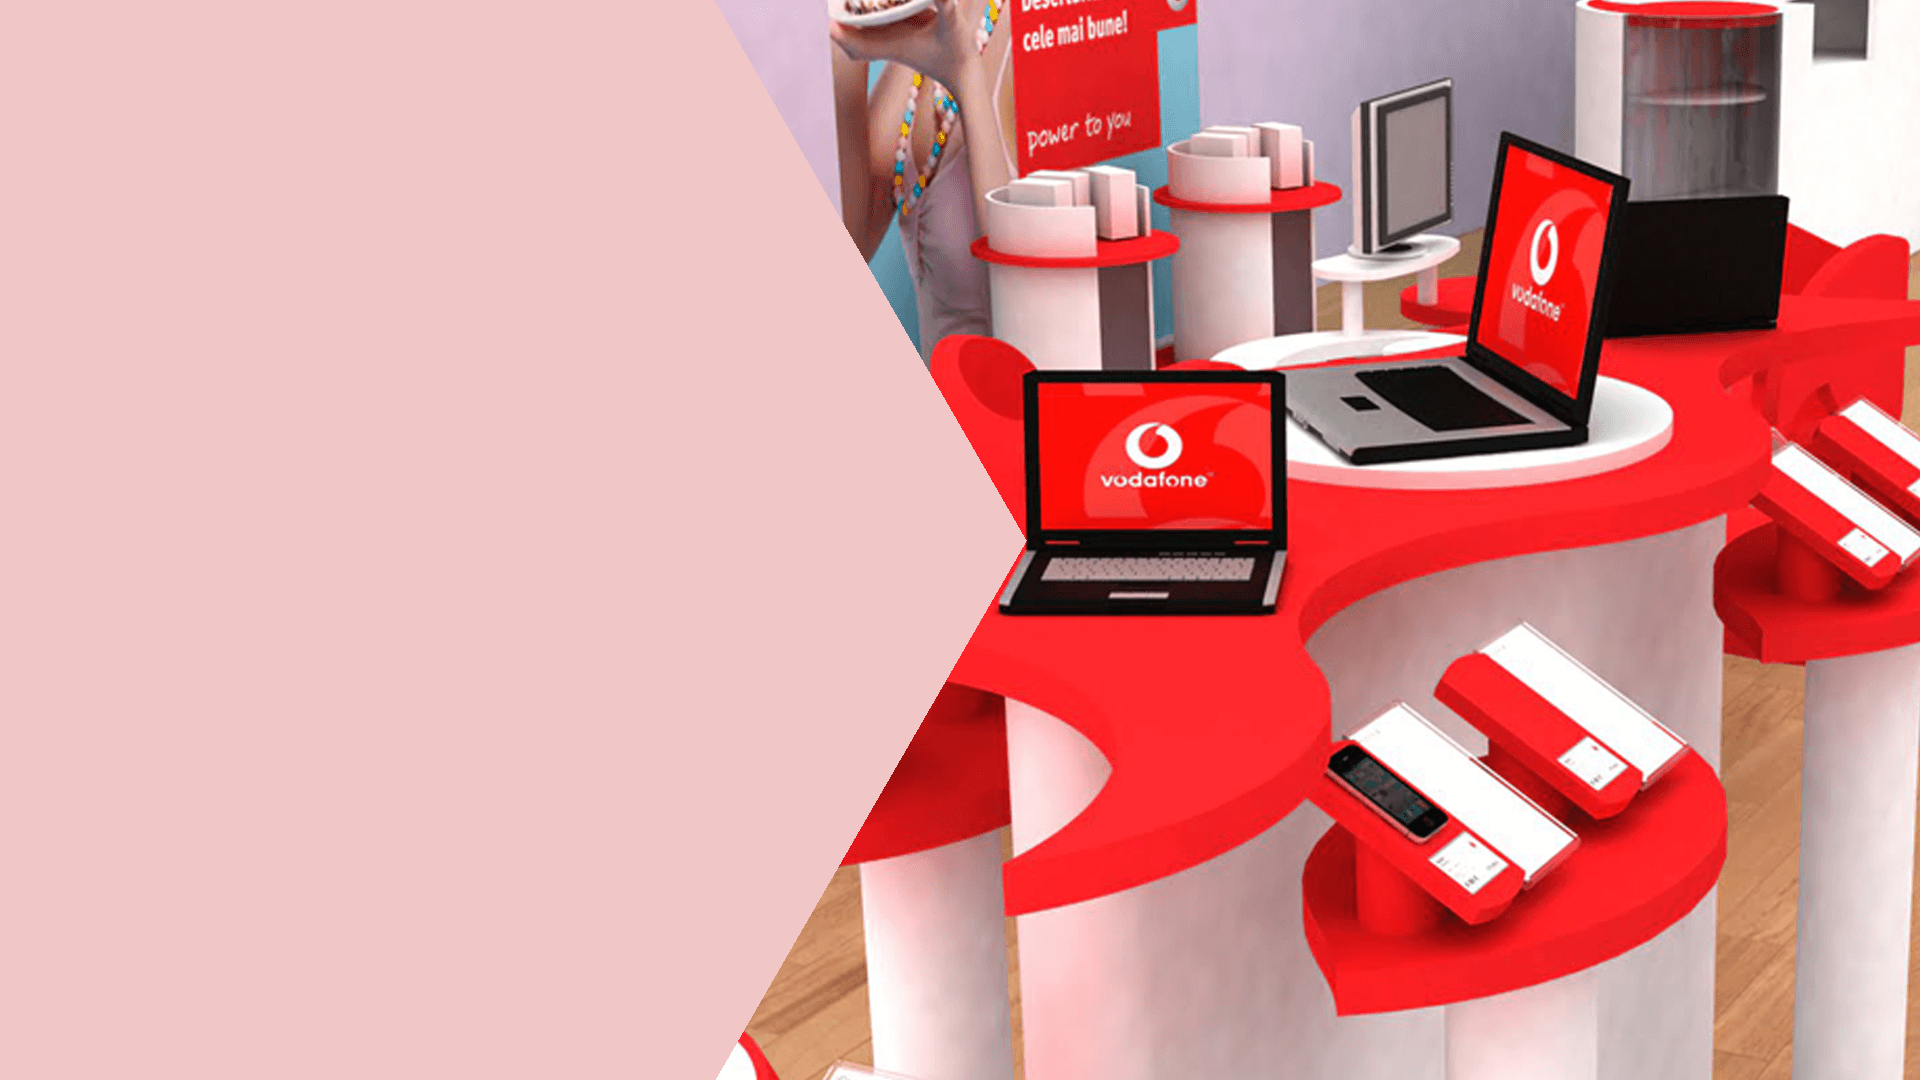 Brand Stories - Vodafone